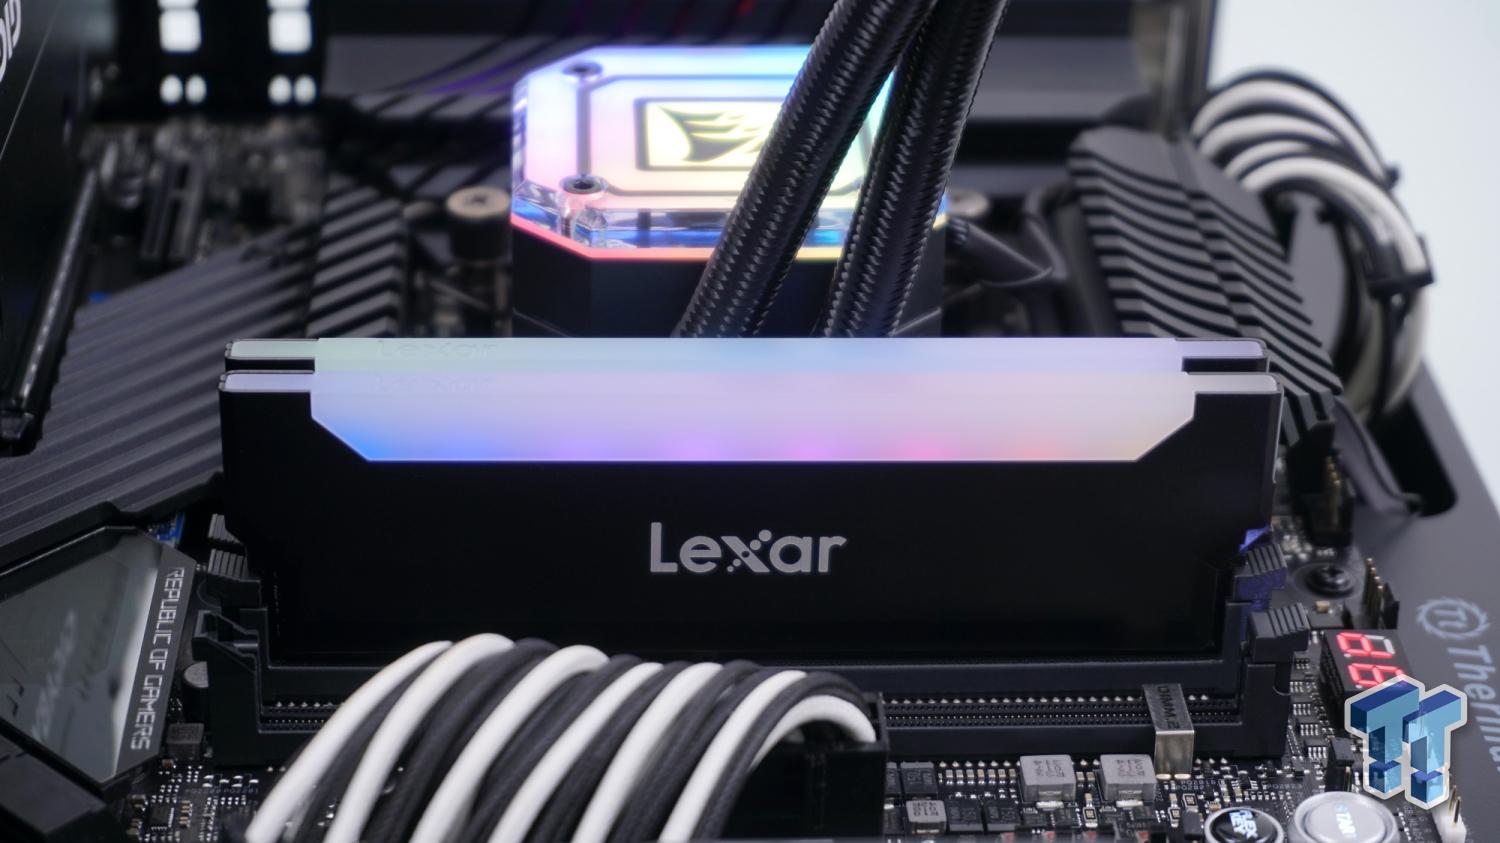 Lexar 16GB Desktop Memory Kit Installation & Review 